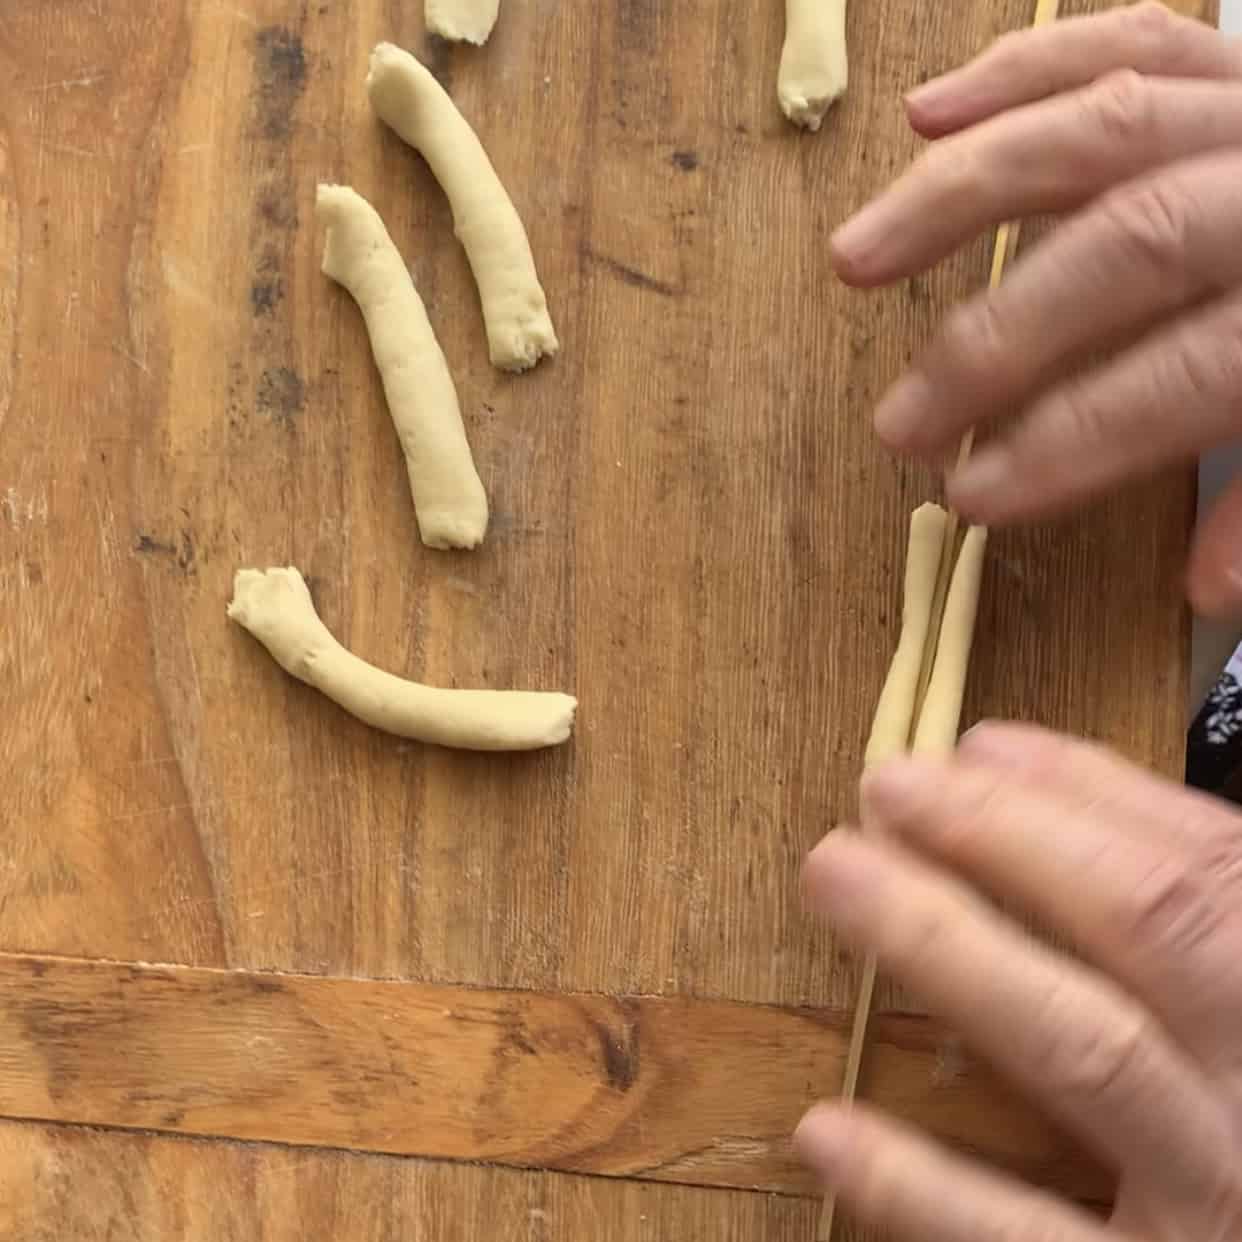 Pressing fusilli iron into center of dough preparing to roll on wooden board